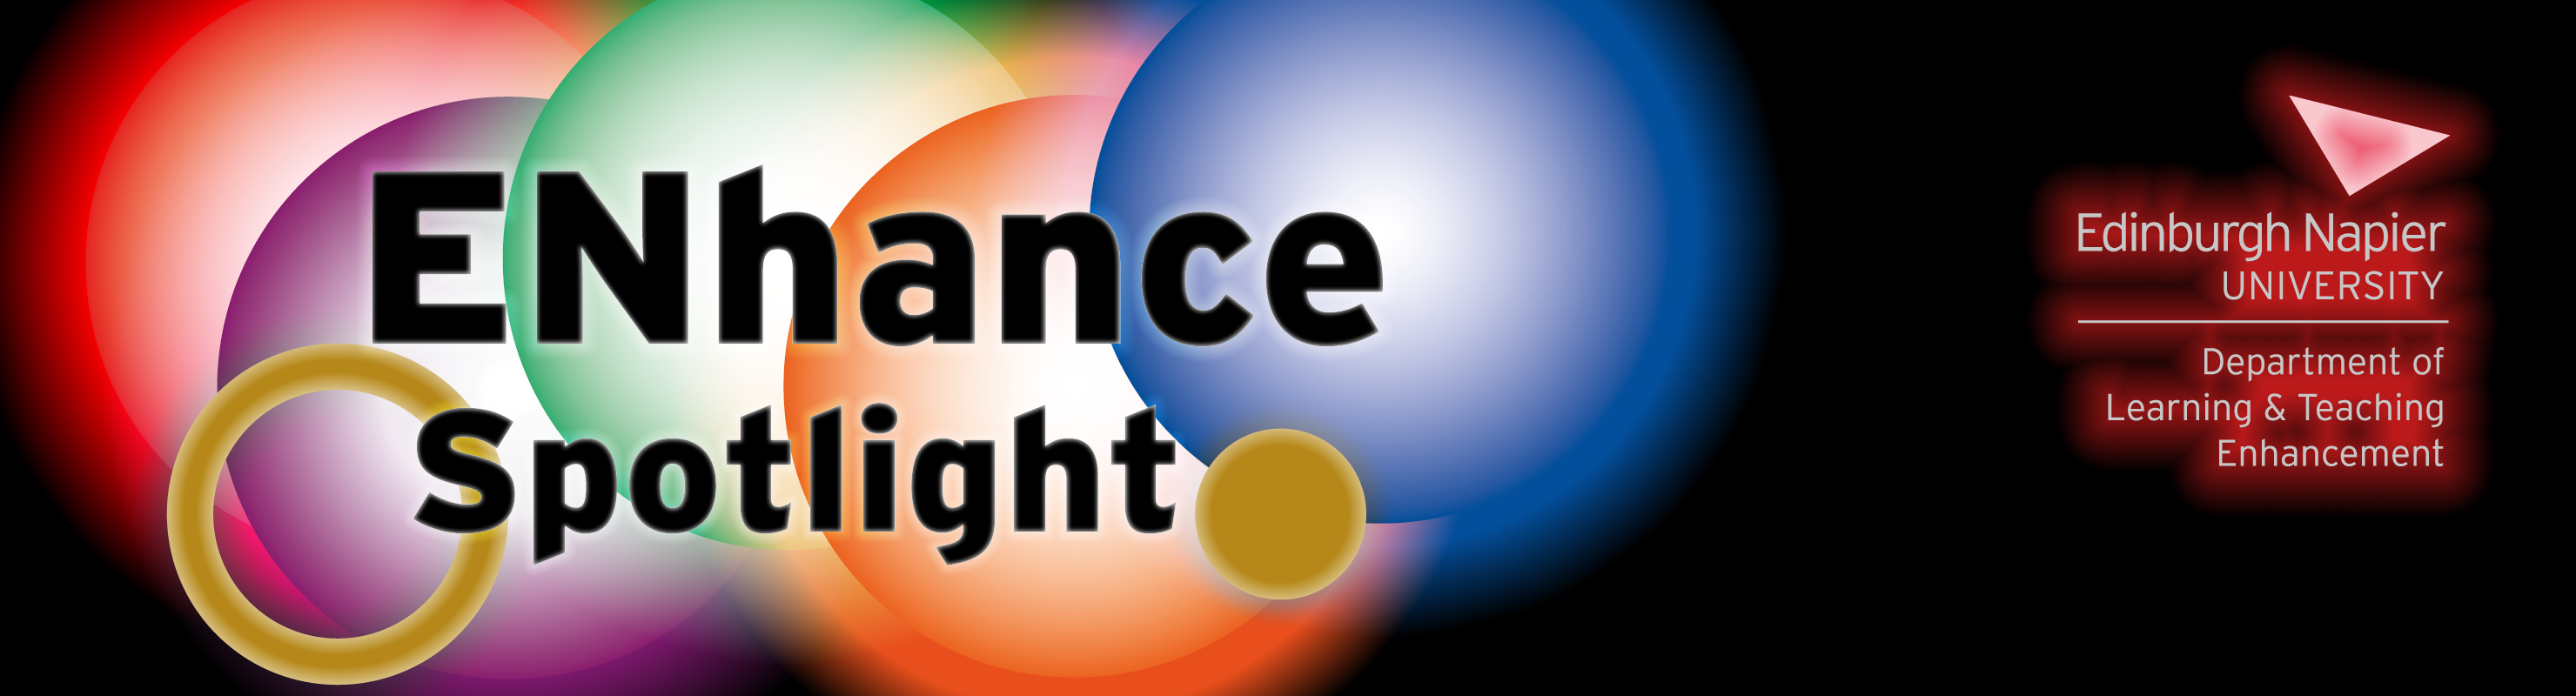 ENhance Spotlight. Edinburgh Napier University Department of Learning & Teaching Enhancement. Image shows coloured lights representing the themes of the ENhance Curriculum Framework.